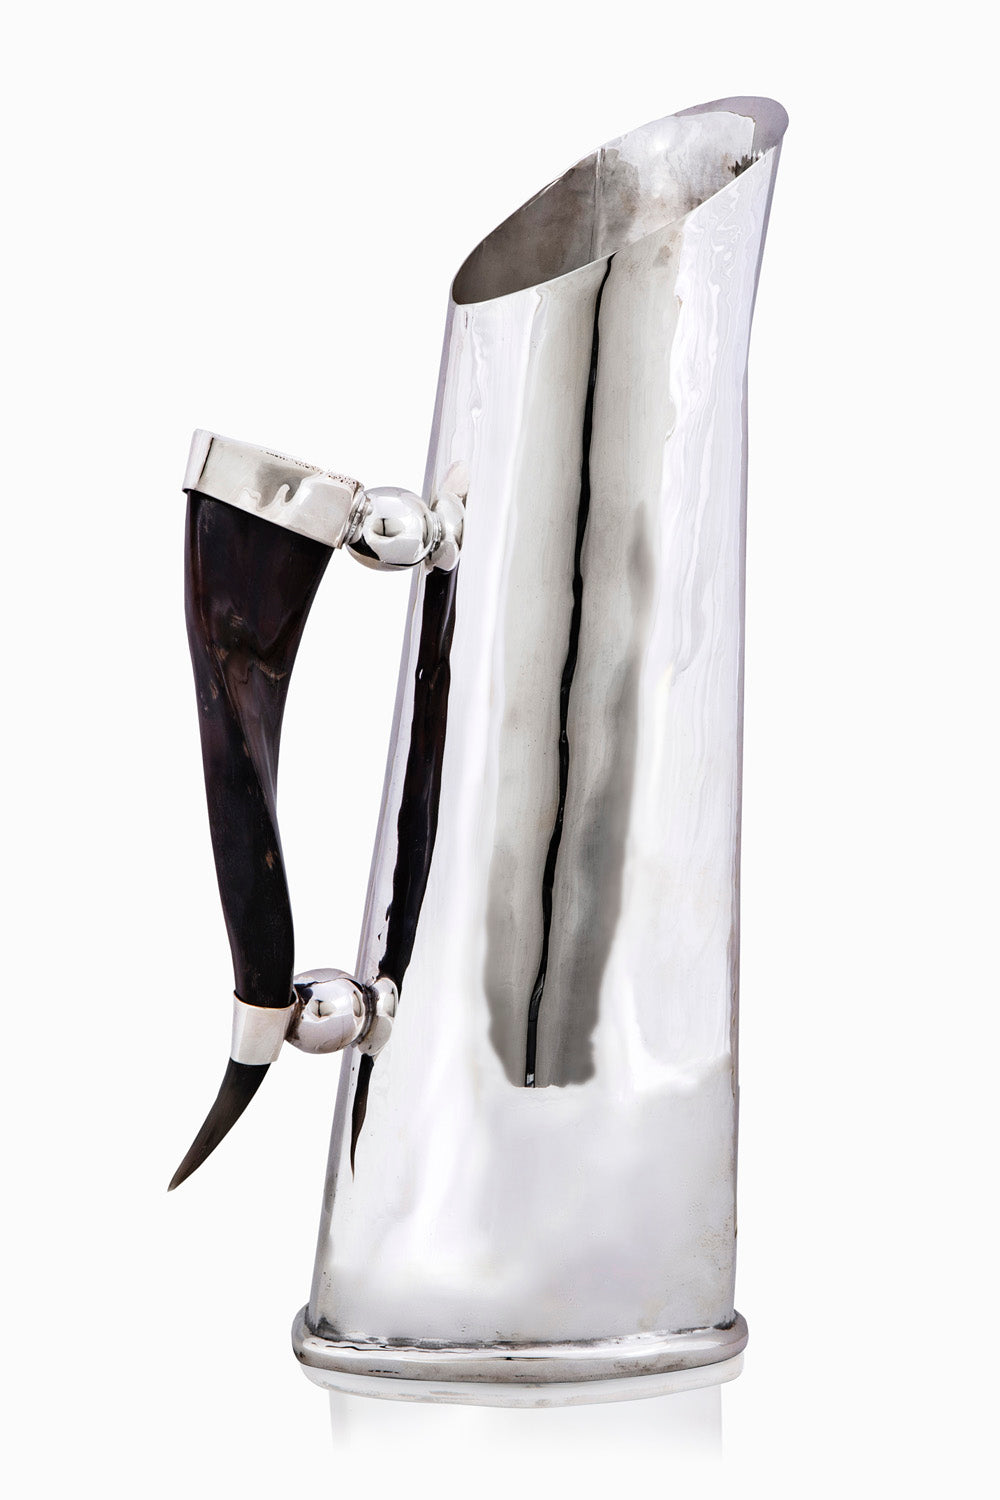 Mendoza Collection Water Jug, Black Horn, Polished Silver